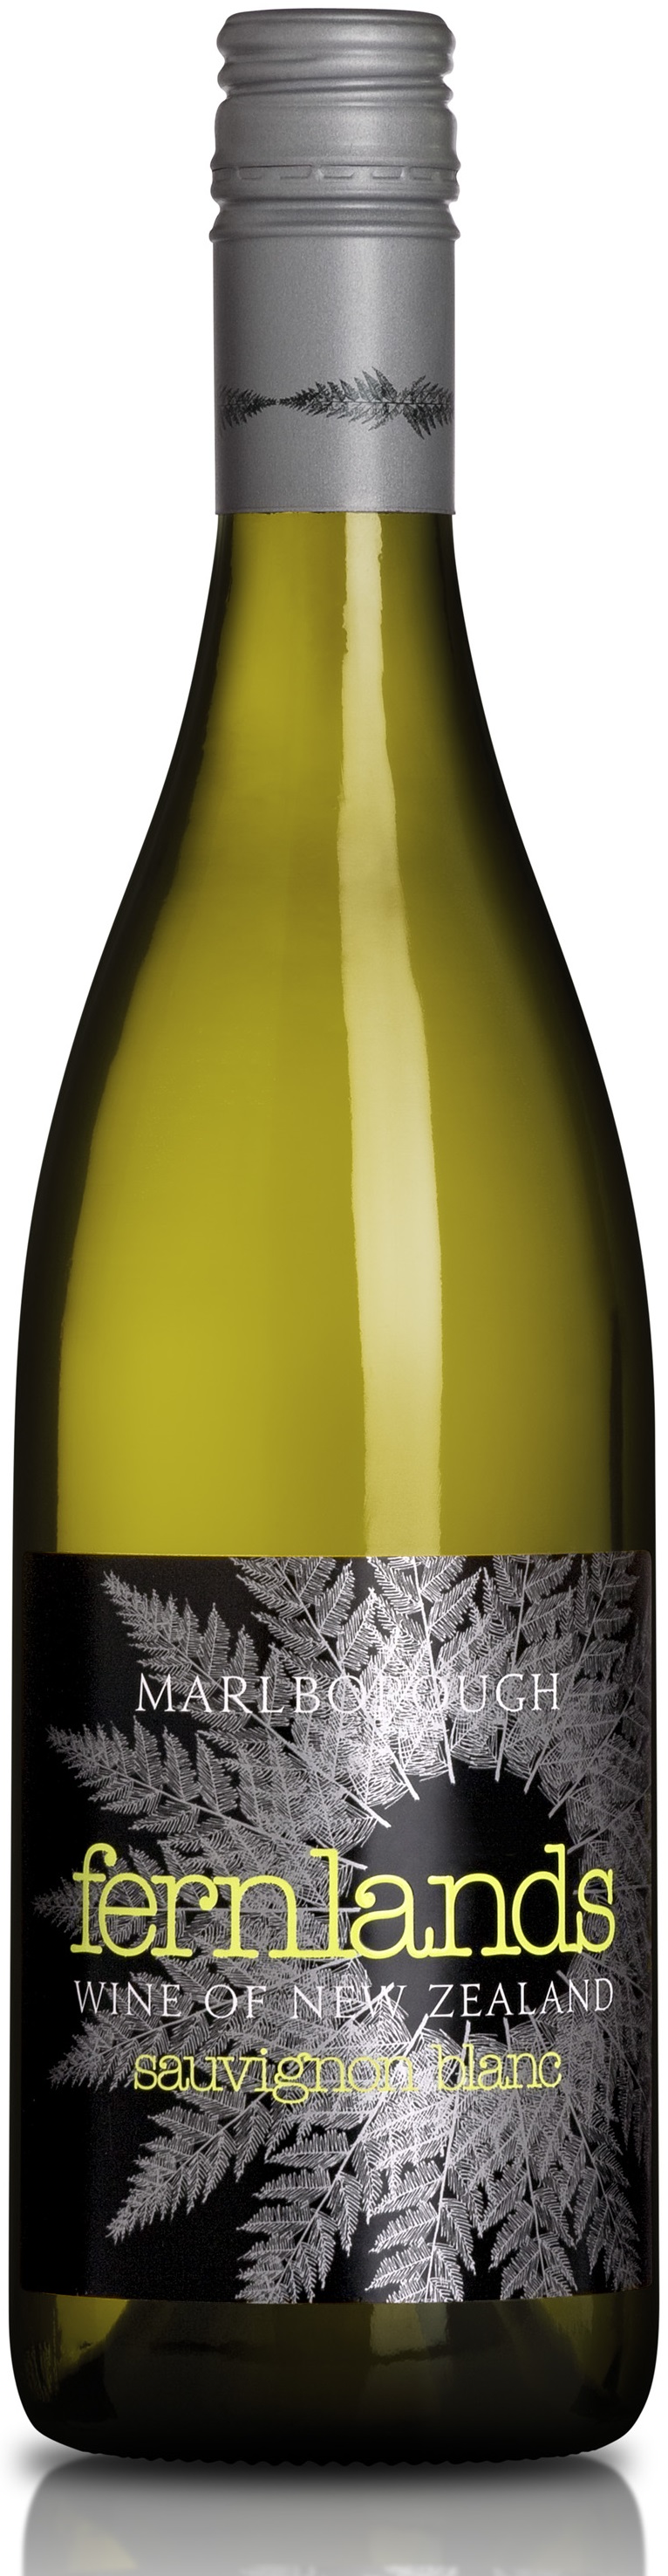 2019 Sauvignon Blanc fernlands 0.75l